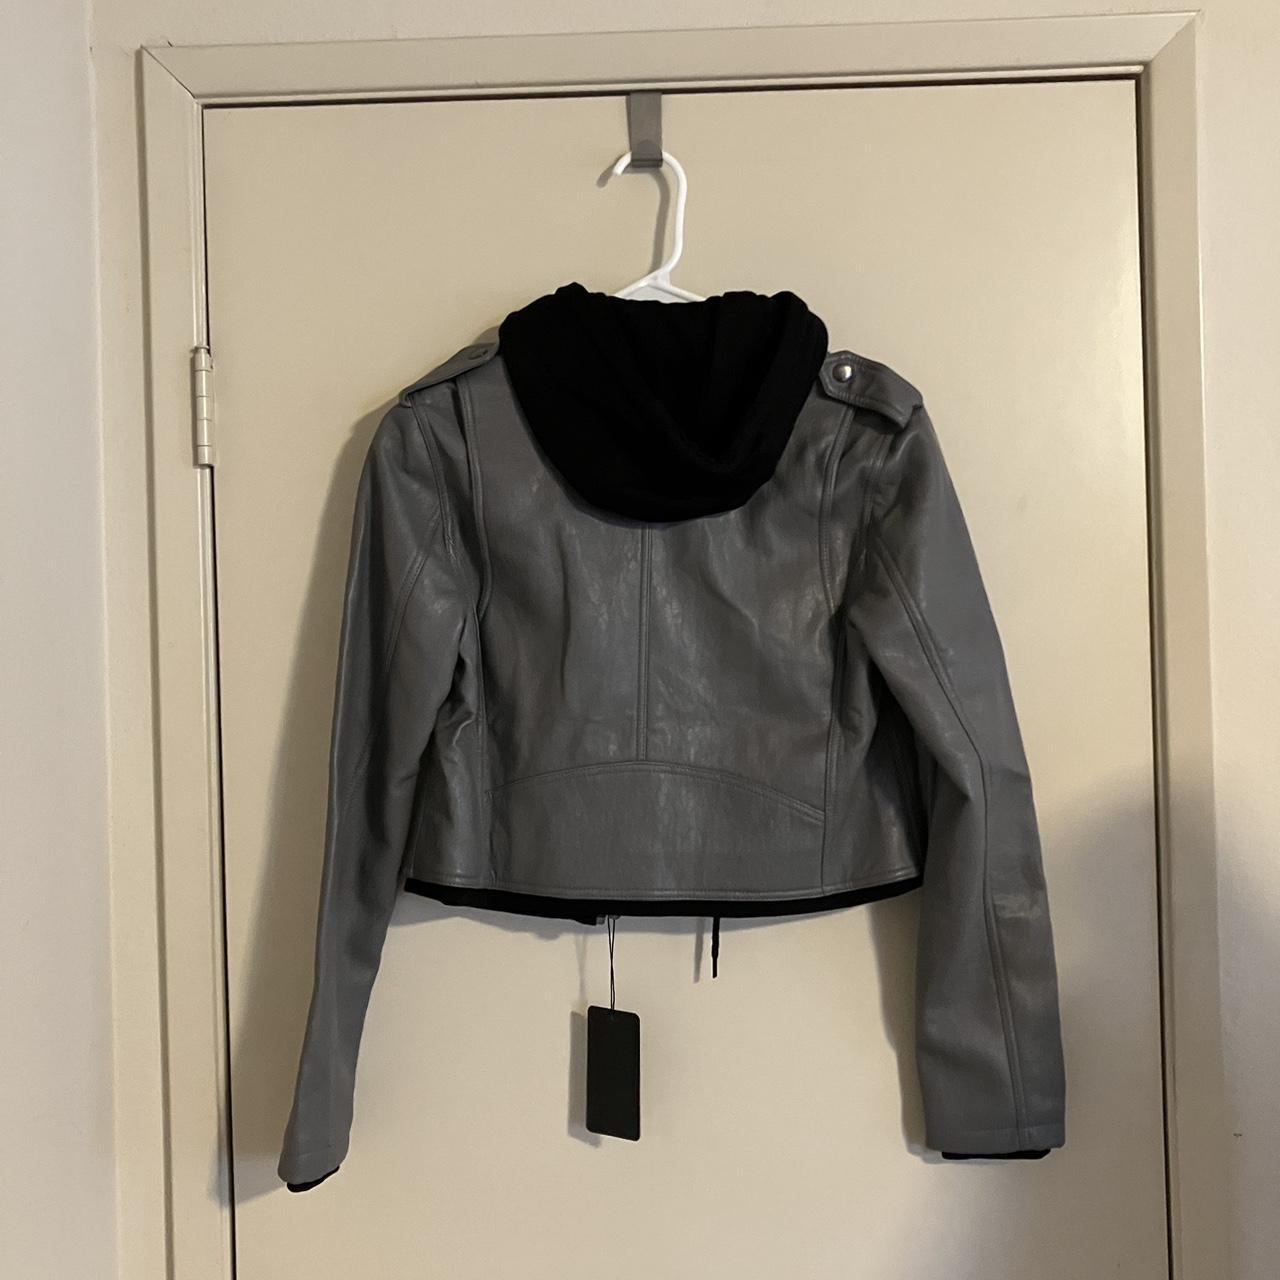 Marais Women's Grey and Black Jacket (3)